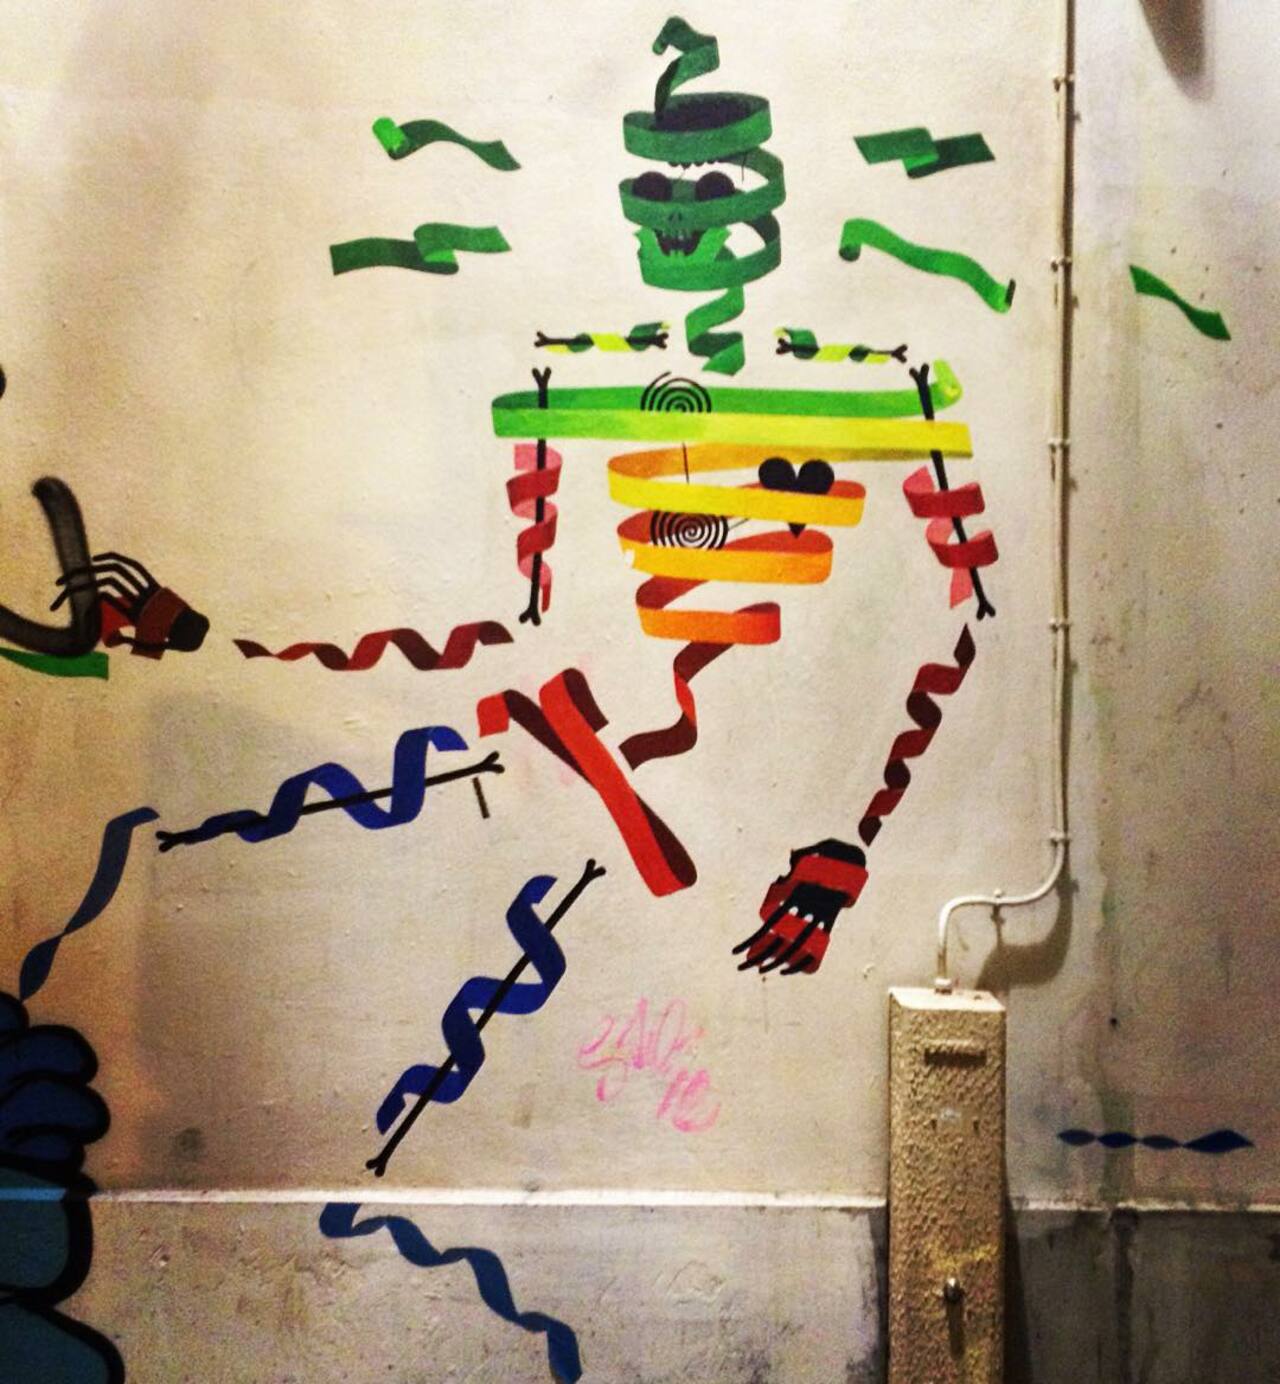 #Paris #graffiti photo by @julosteart http://ift.tt/1LQYPf0 #StreetArt https://t.co/7c9WEwUsPa